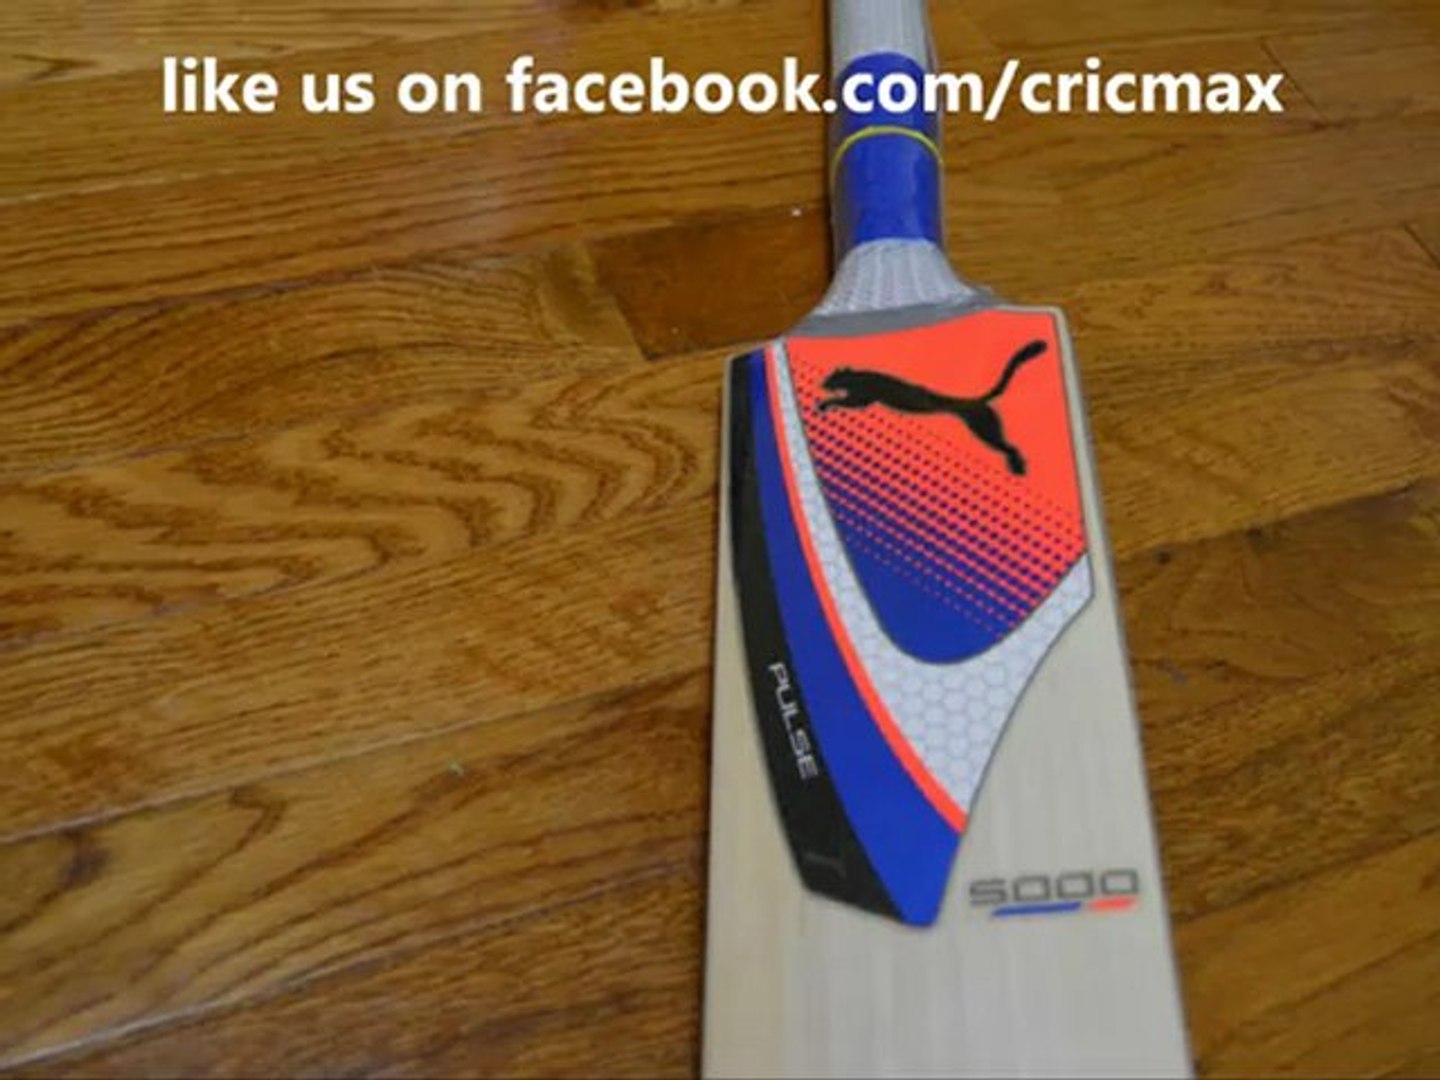 Puma Pulse 5000 Cricket Bat - CricMax (www.cricmax.com) - video Dailymotion